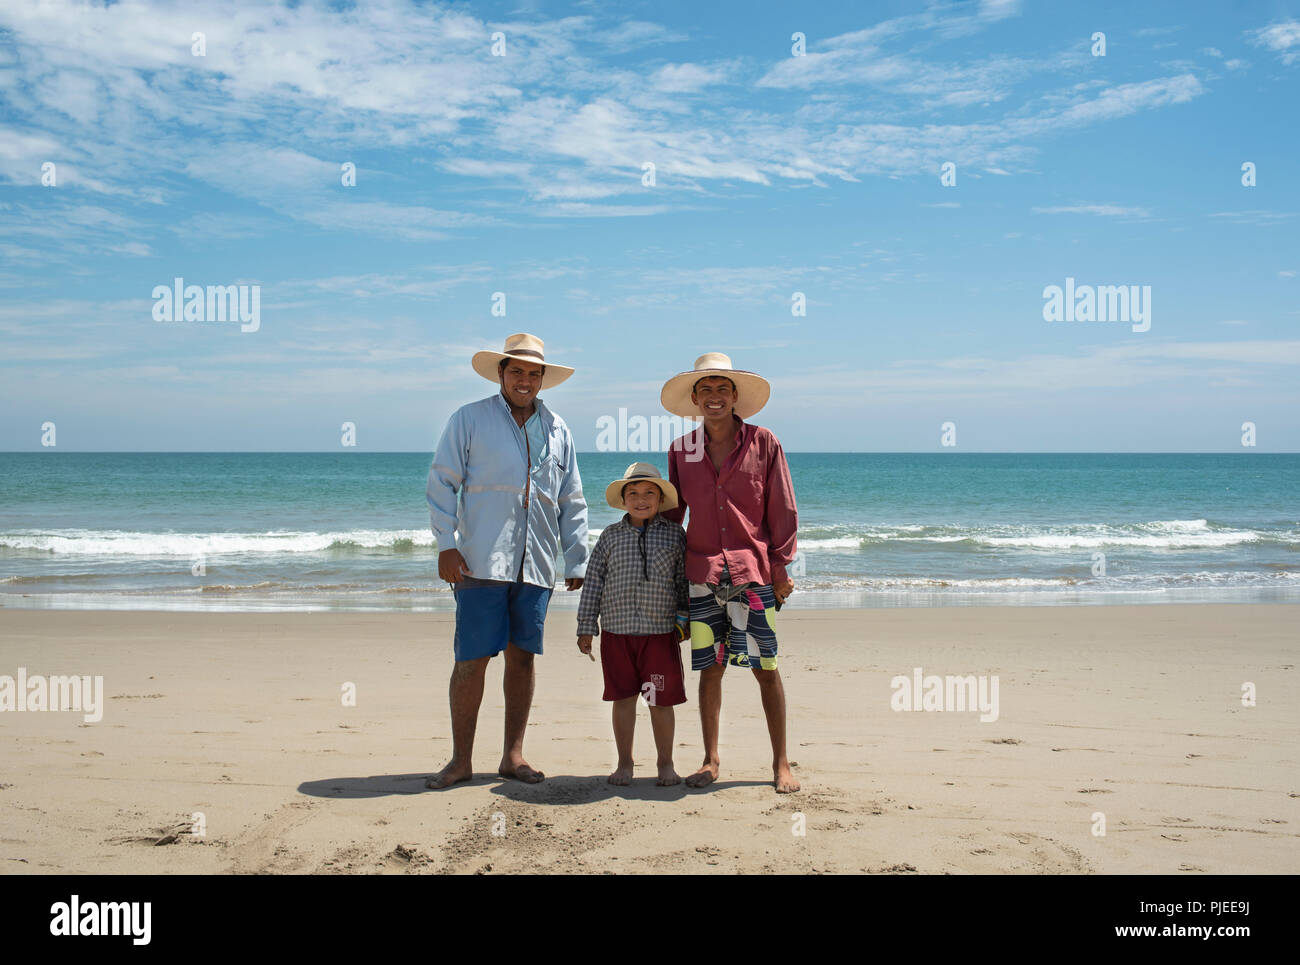 Three Peruvian boys wearing shorts, shirts and straw hats. Environmental portrait on Vichayito beach near Mancora, Peru. Editorial use only. Aug 2018 Stock Photo